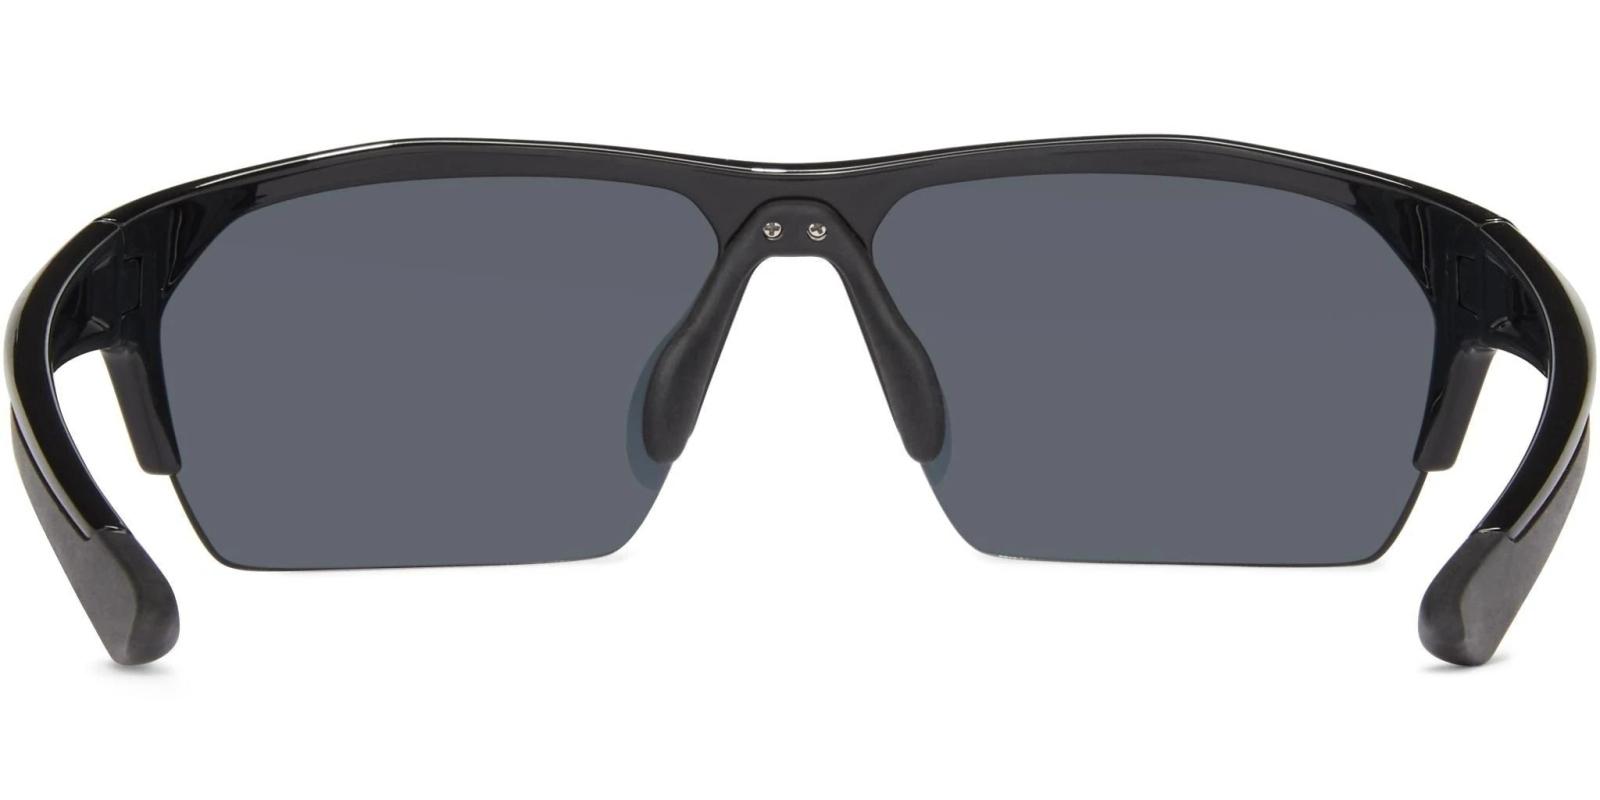 icu Eyewear Ranger Sunglasses